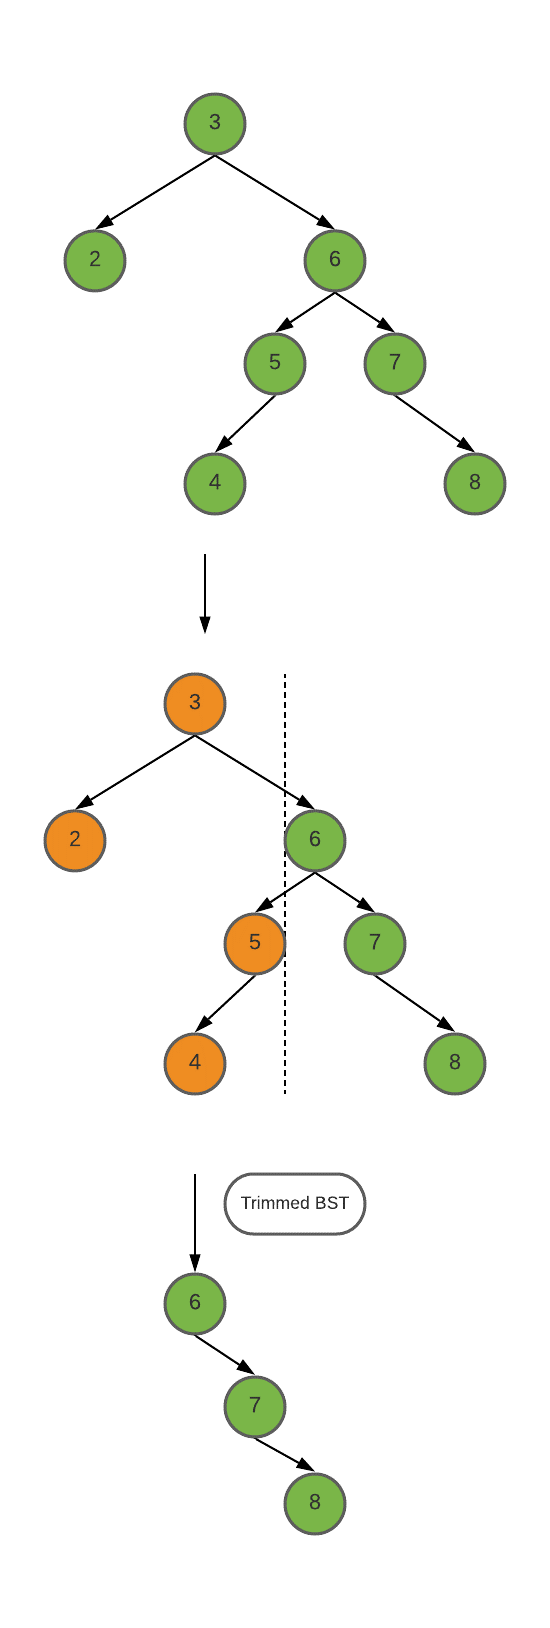 Trim a Binary Search Tree